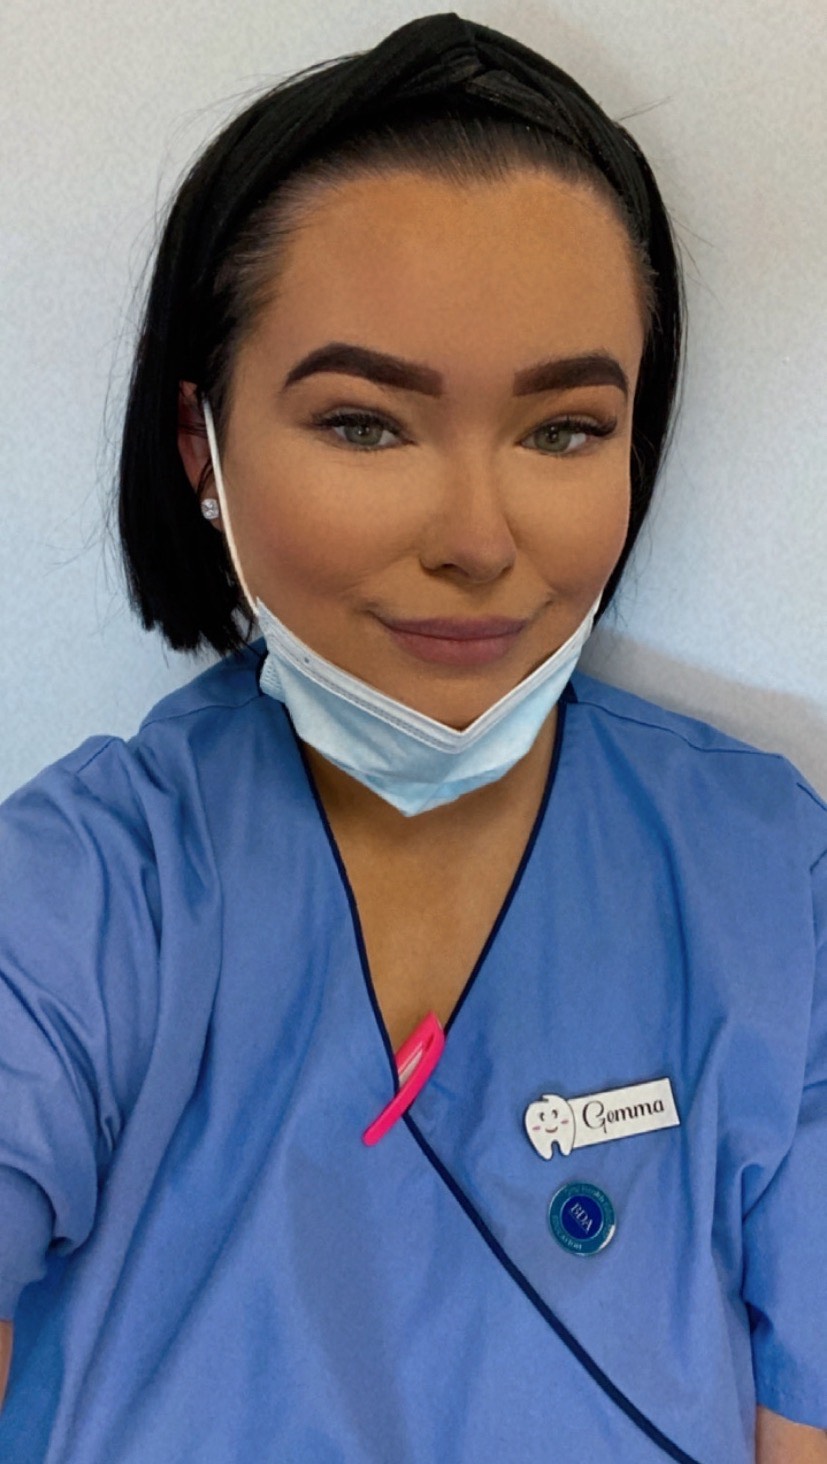 Dental nursing – Gemma Forsythe